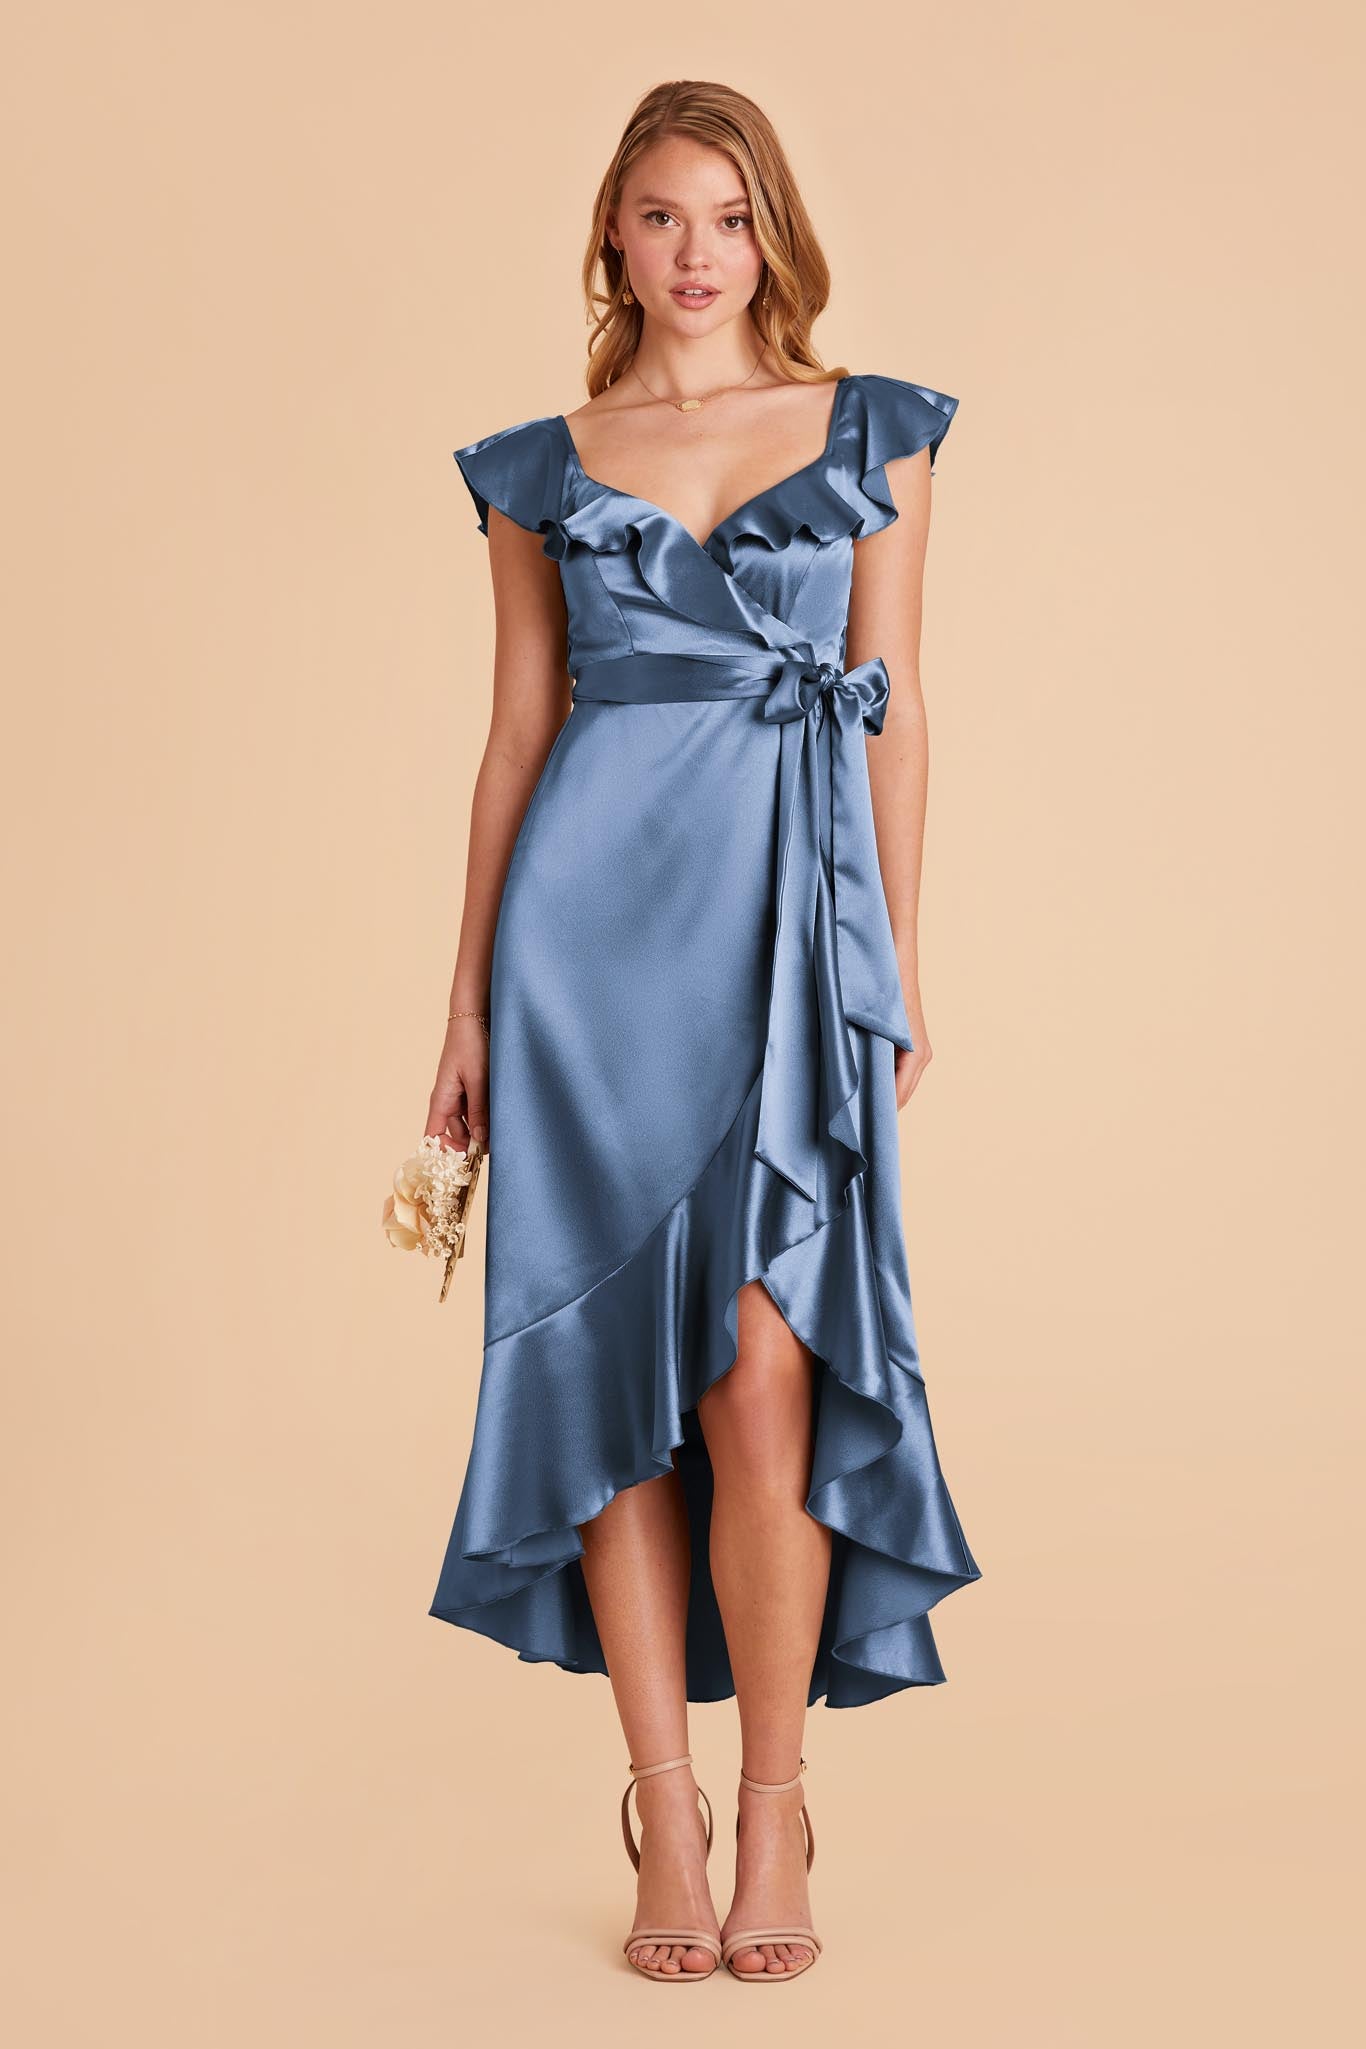 Slate Blue Satin Dress - Satin Midi Dress - Satin Slip Dress - Lulus